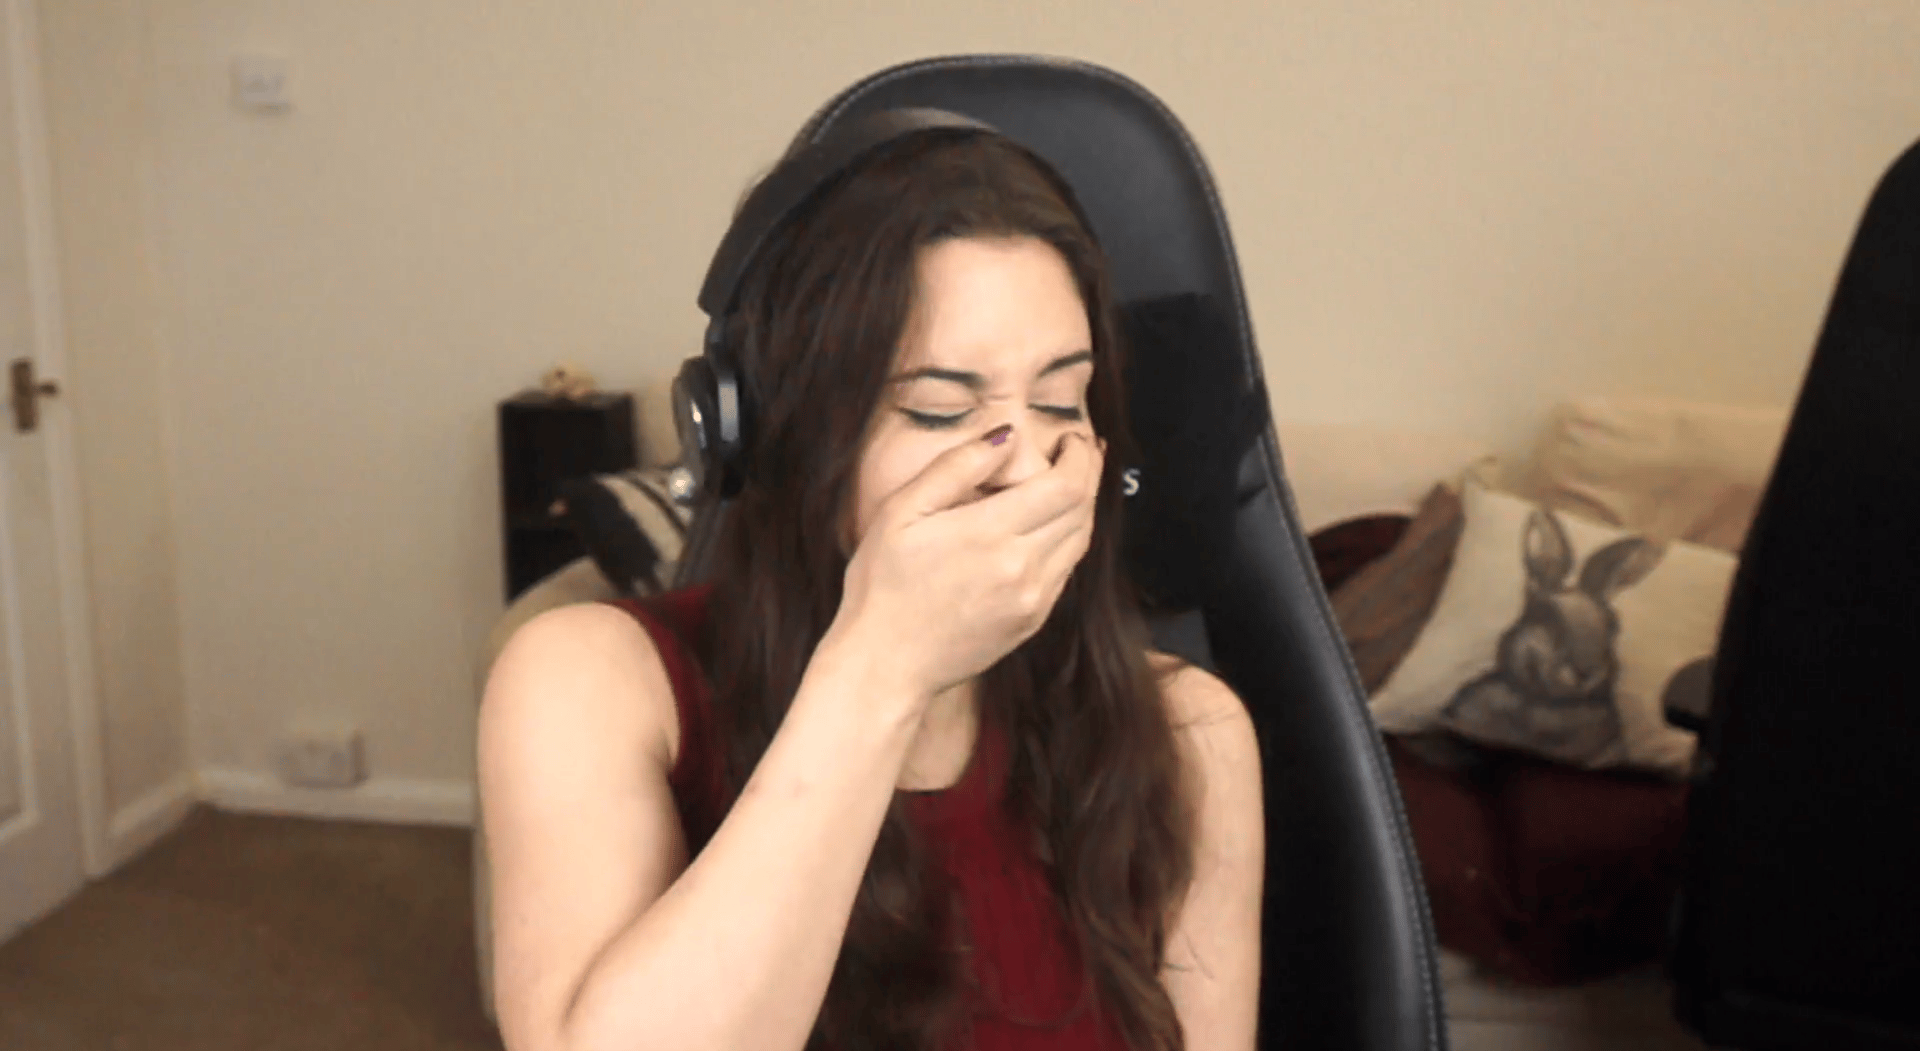 Sweet Anita laughing on Twitch stream